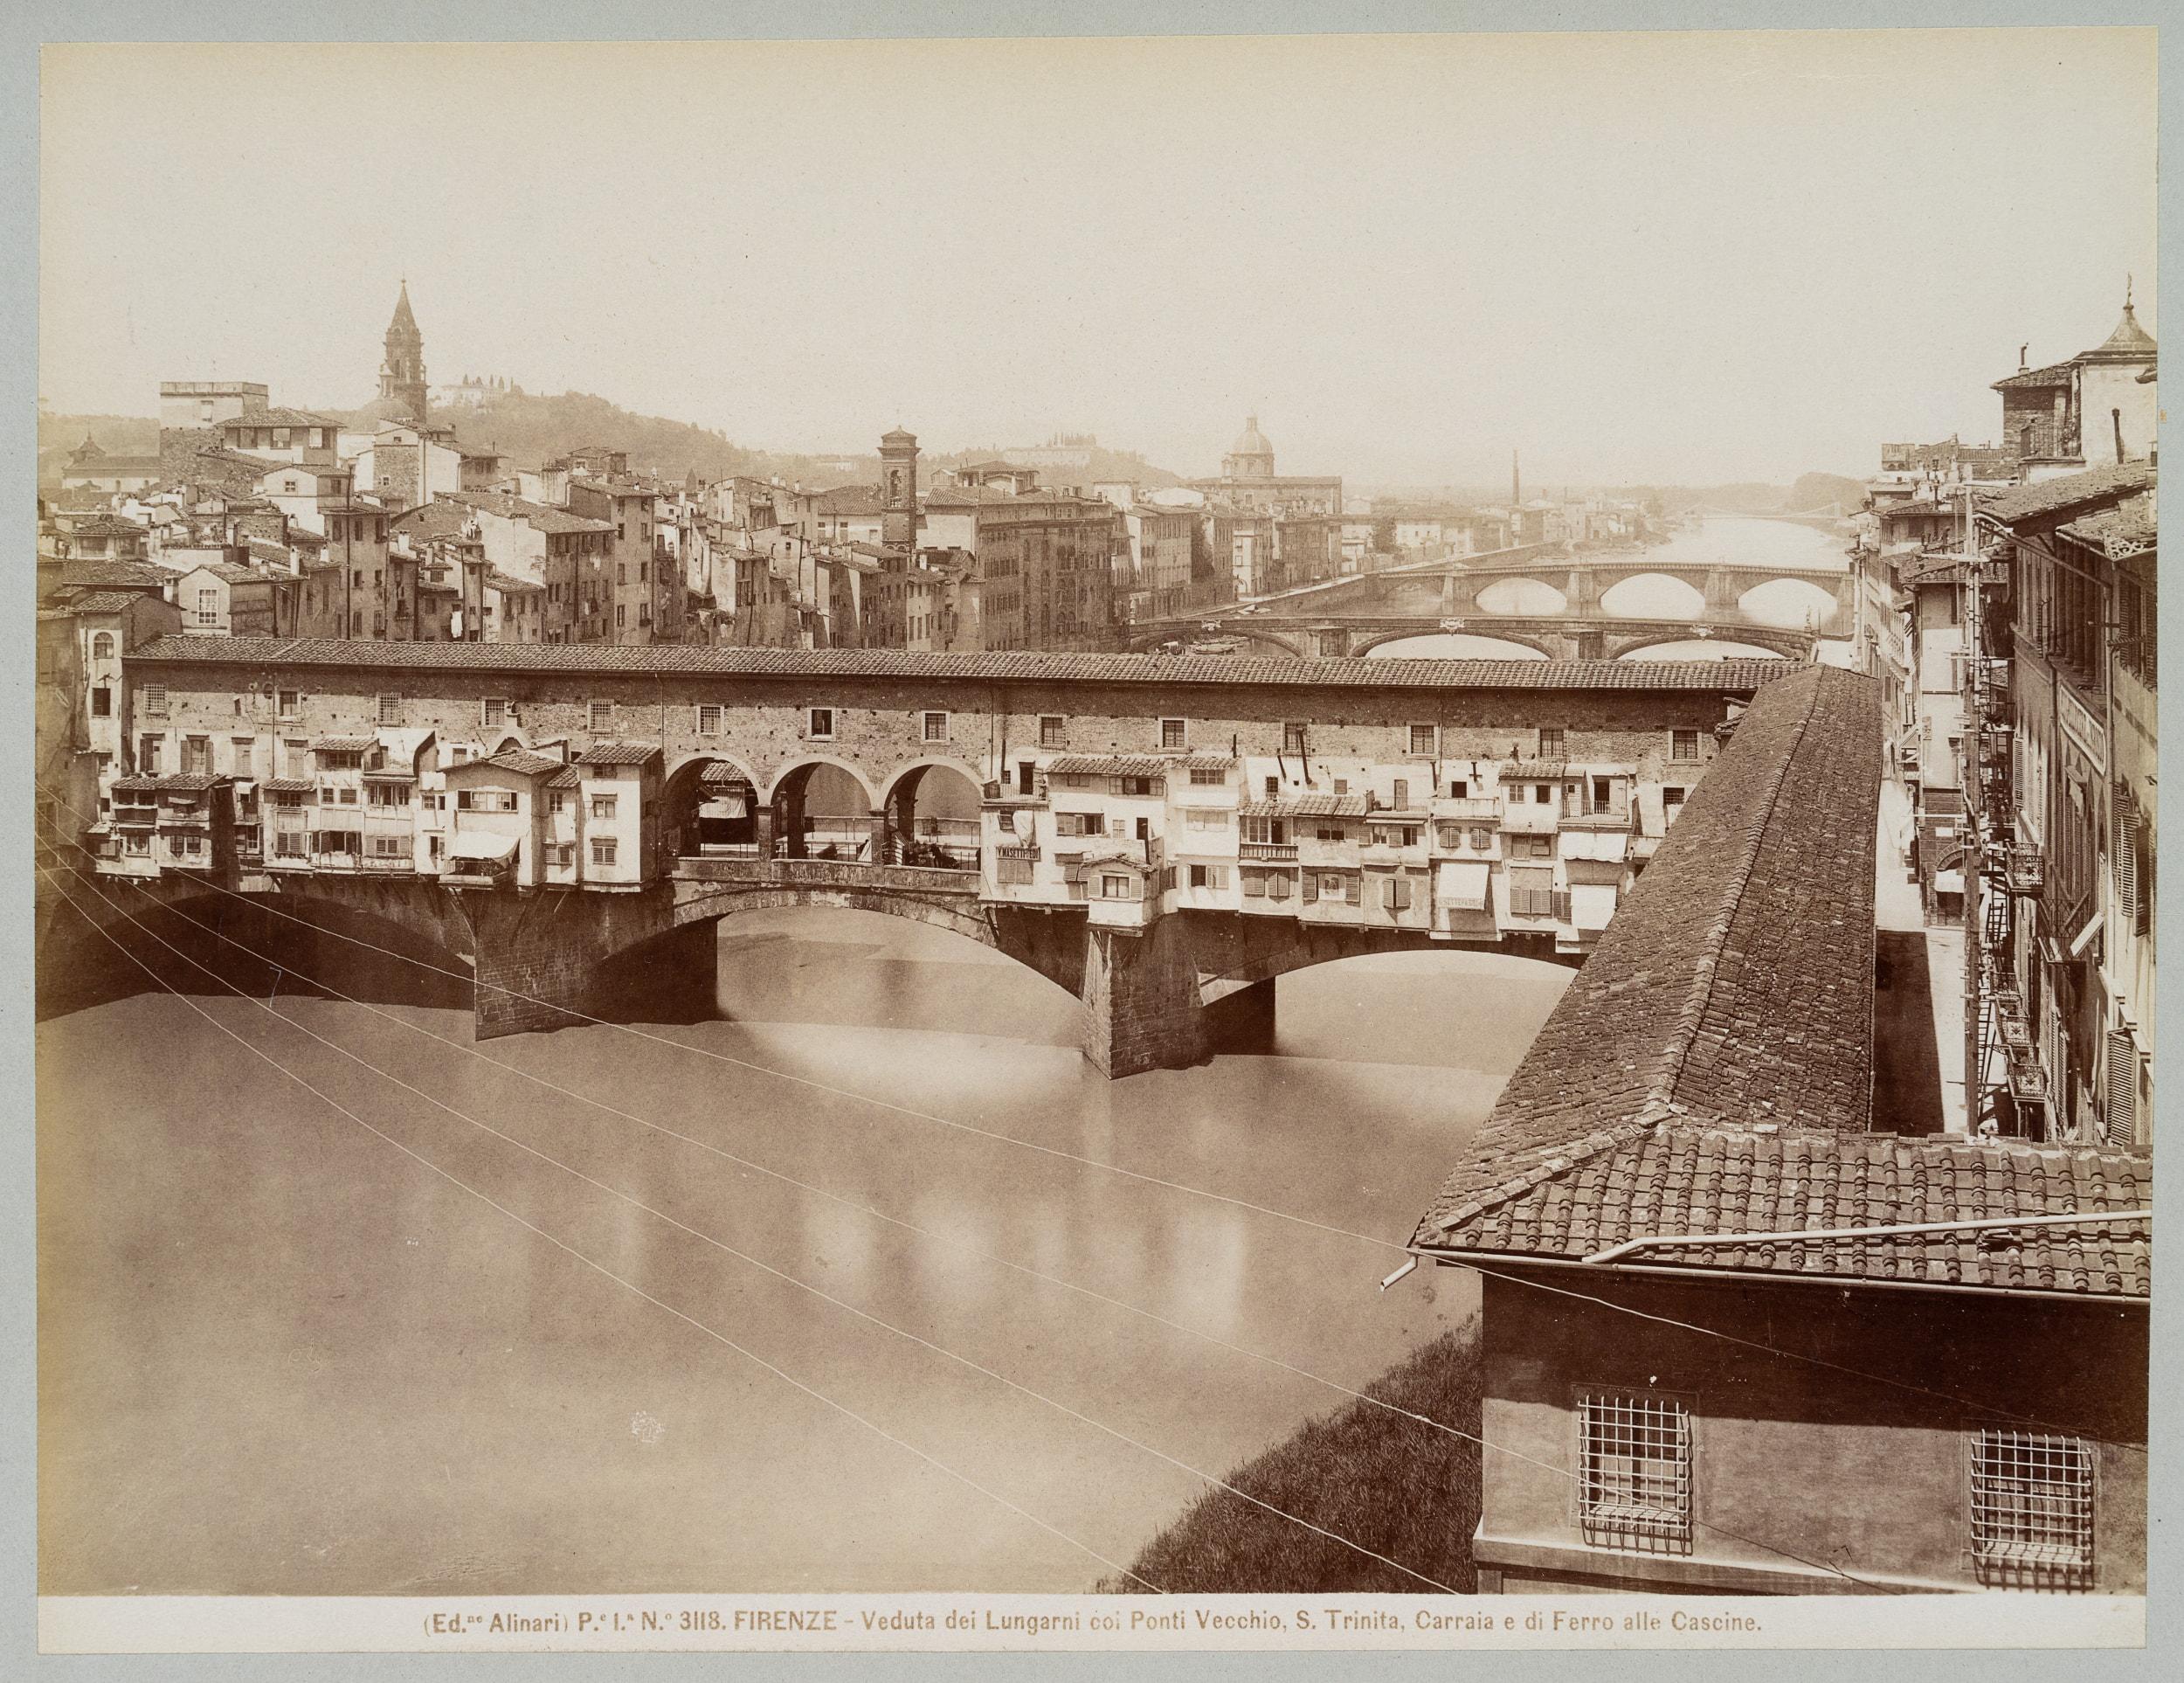 Ponte Vecchio over the Arno, Florence - Photograph by Fratelli Alinari